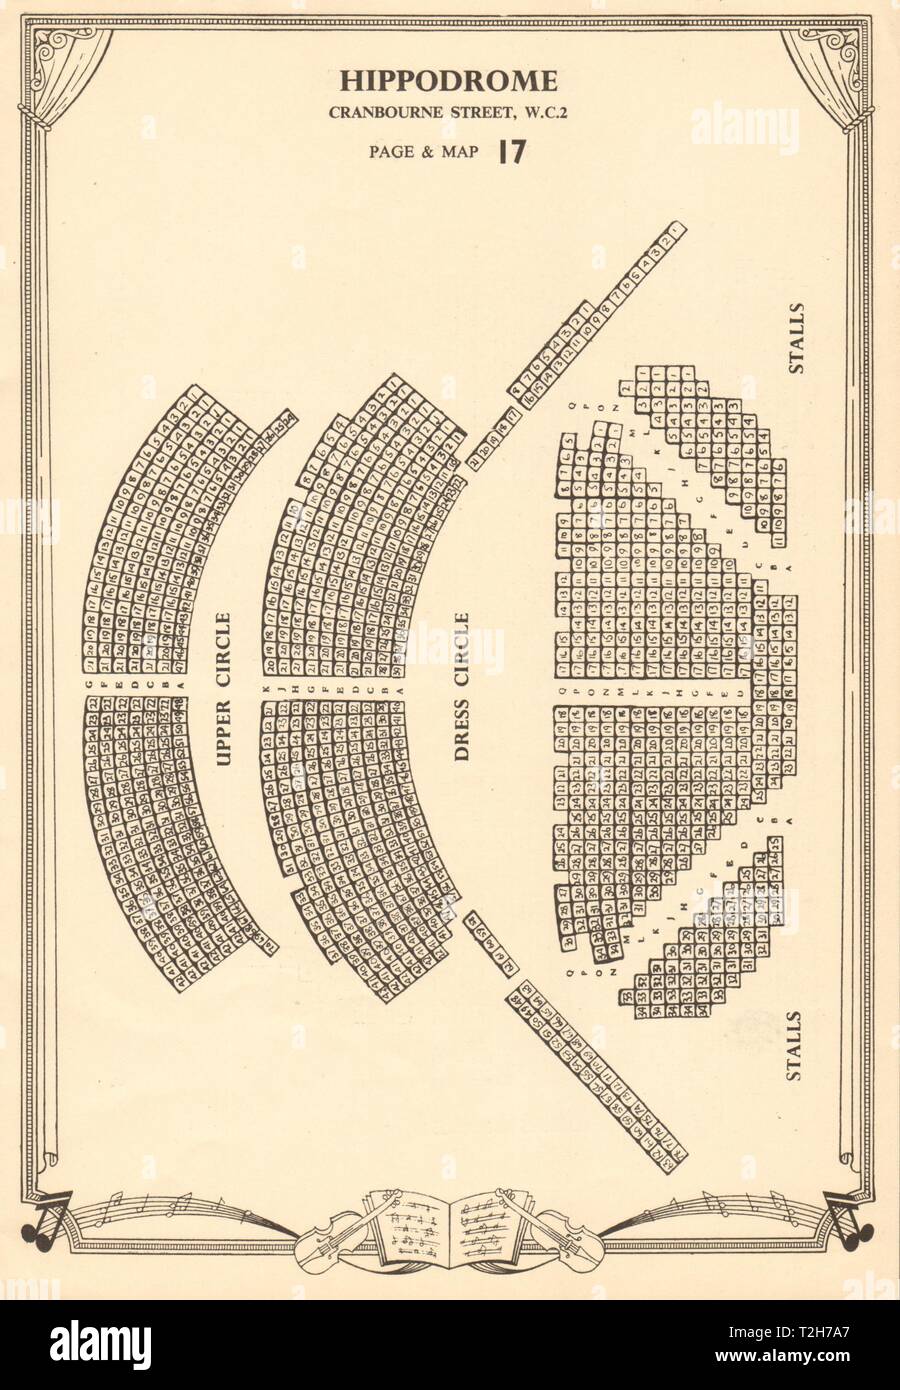 Hippodrome London Theatre Seating Chart